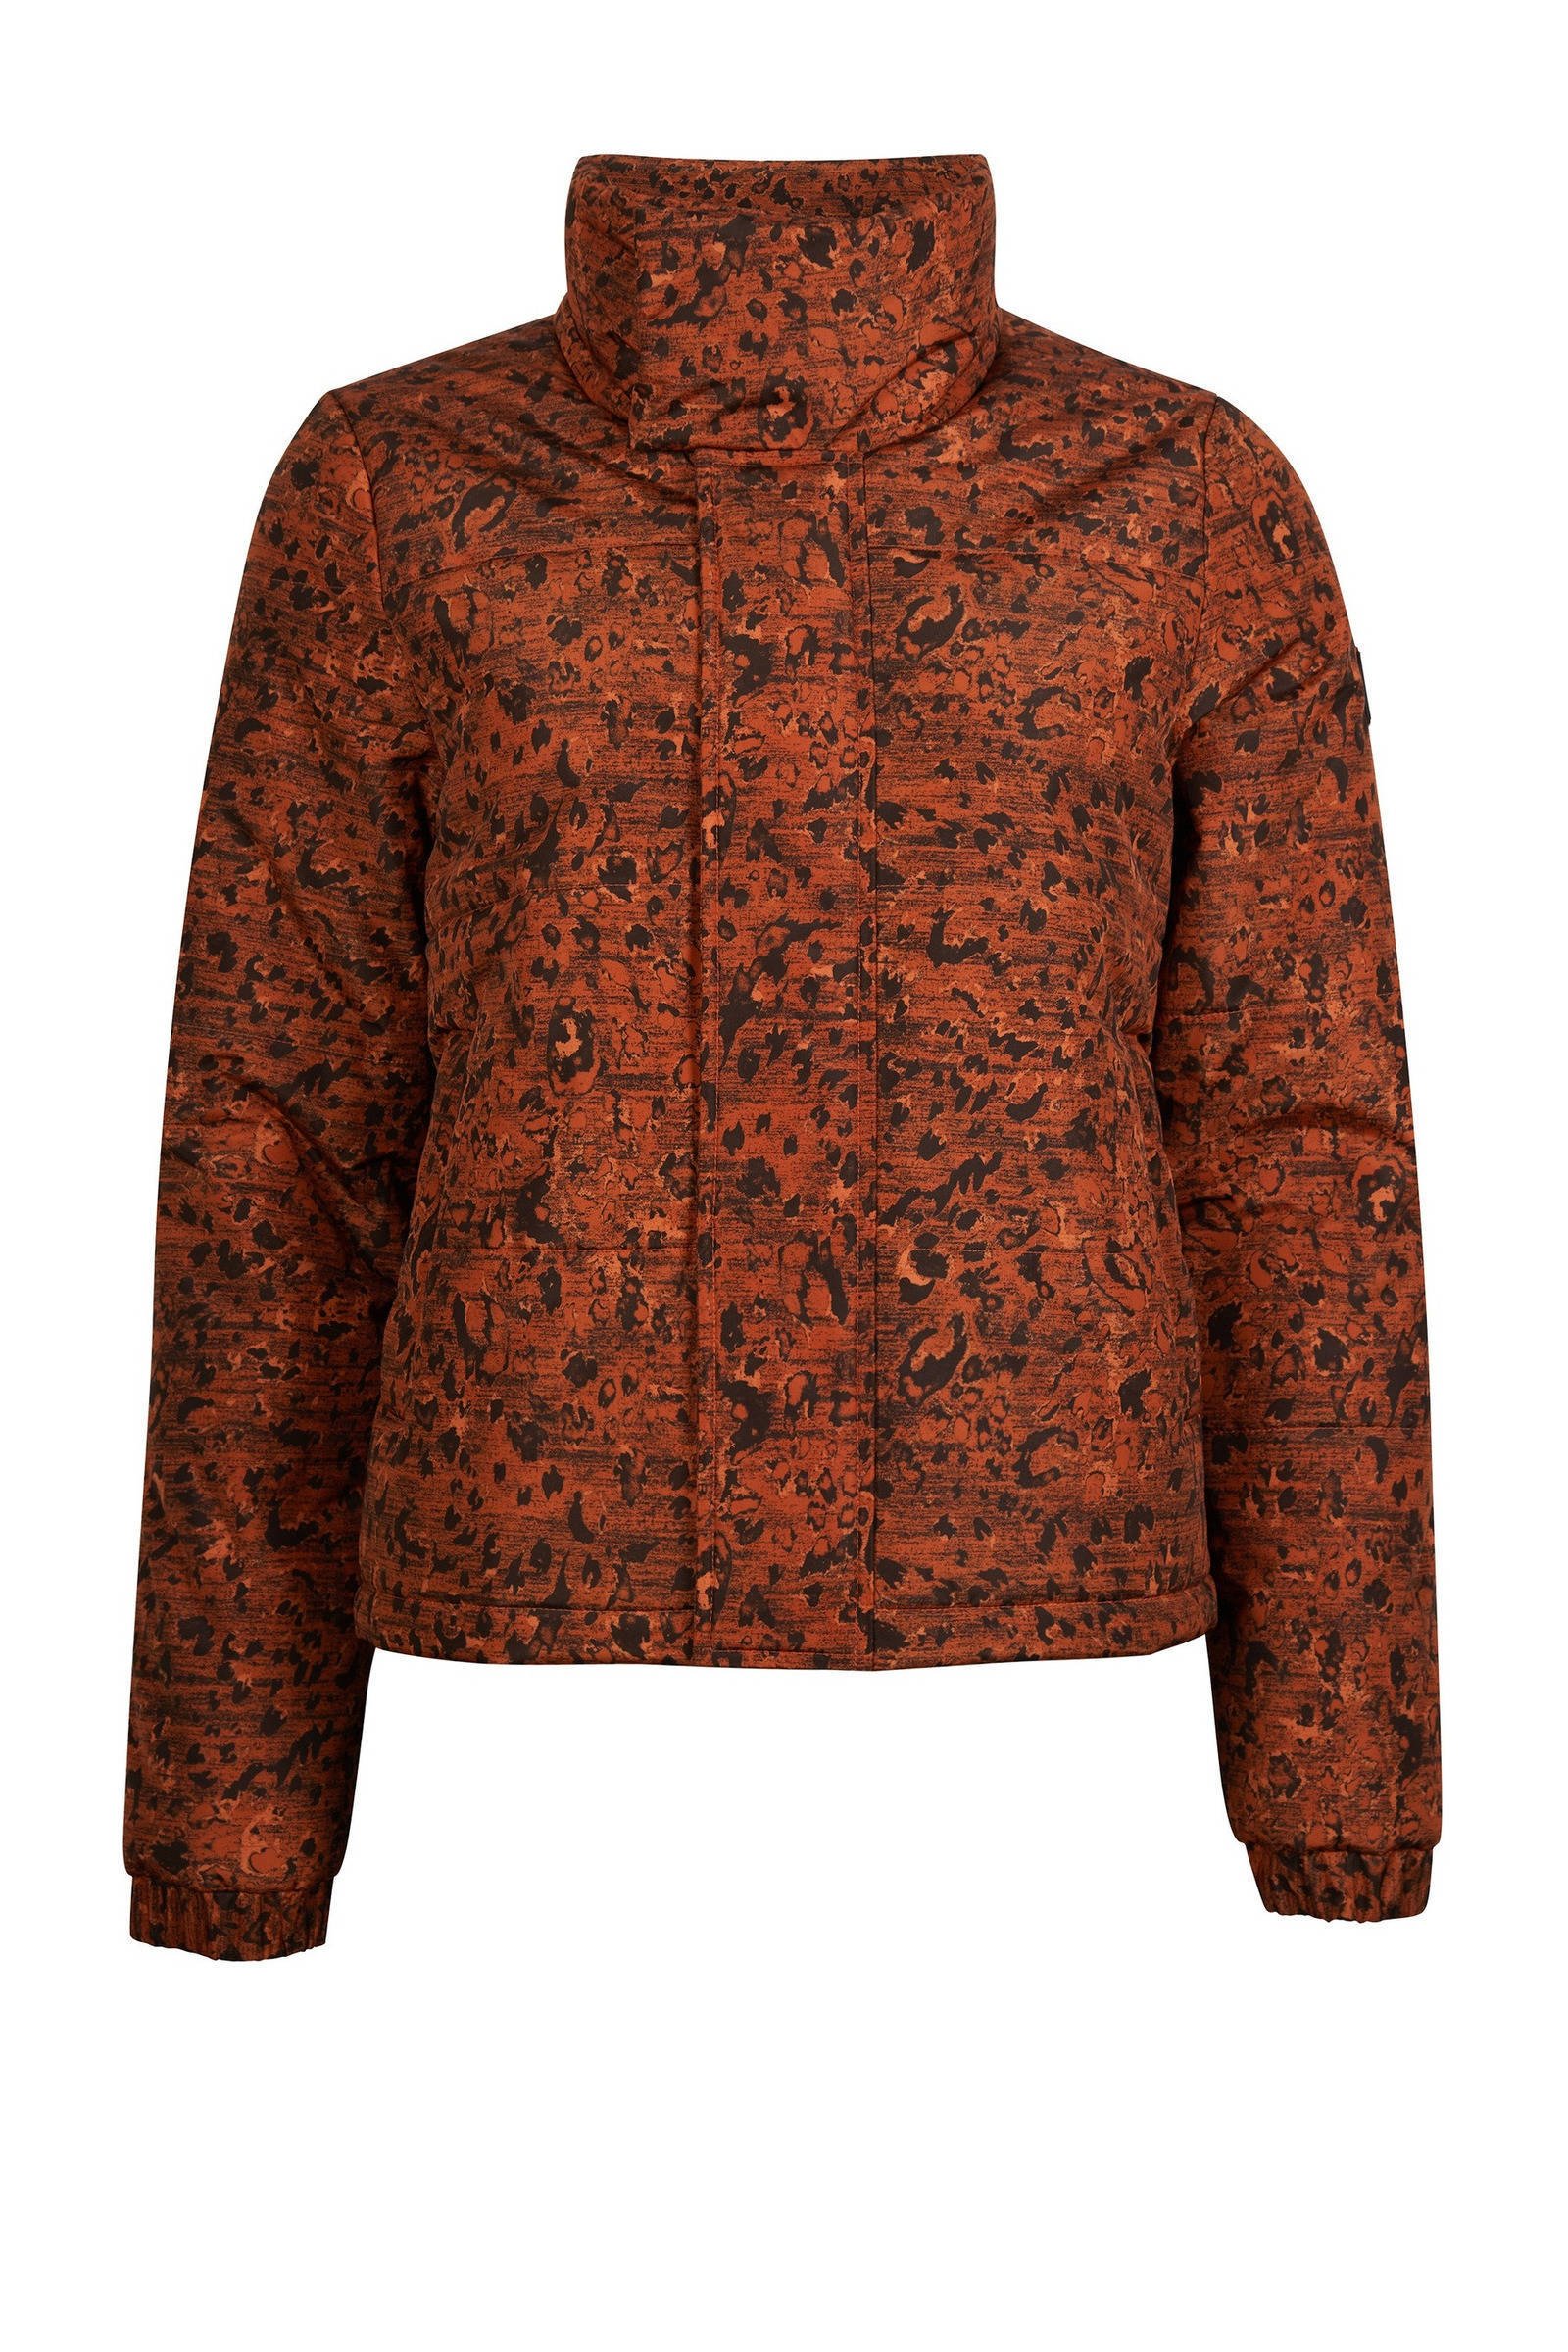 O'Neill outdoor jas Misty bruin/rood online kopen